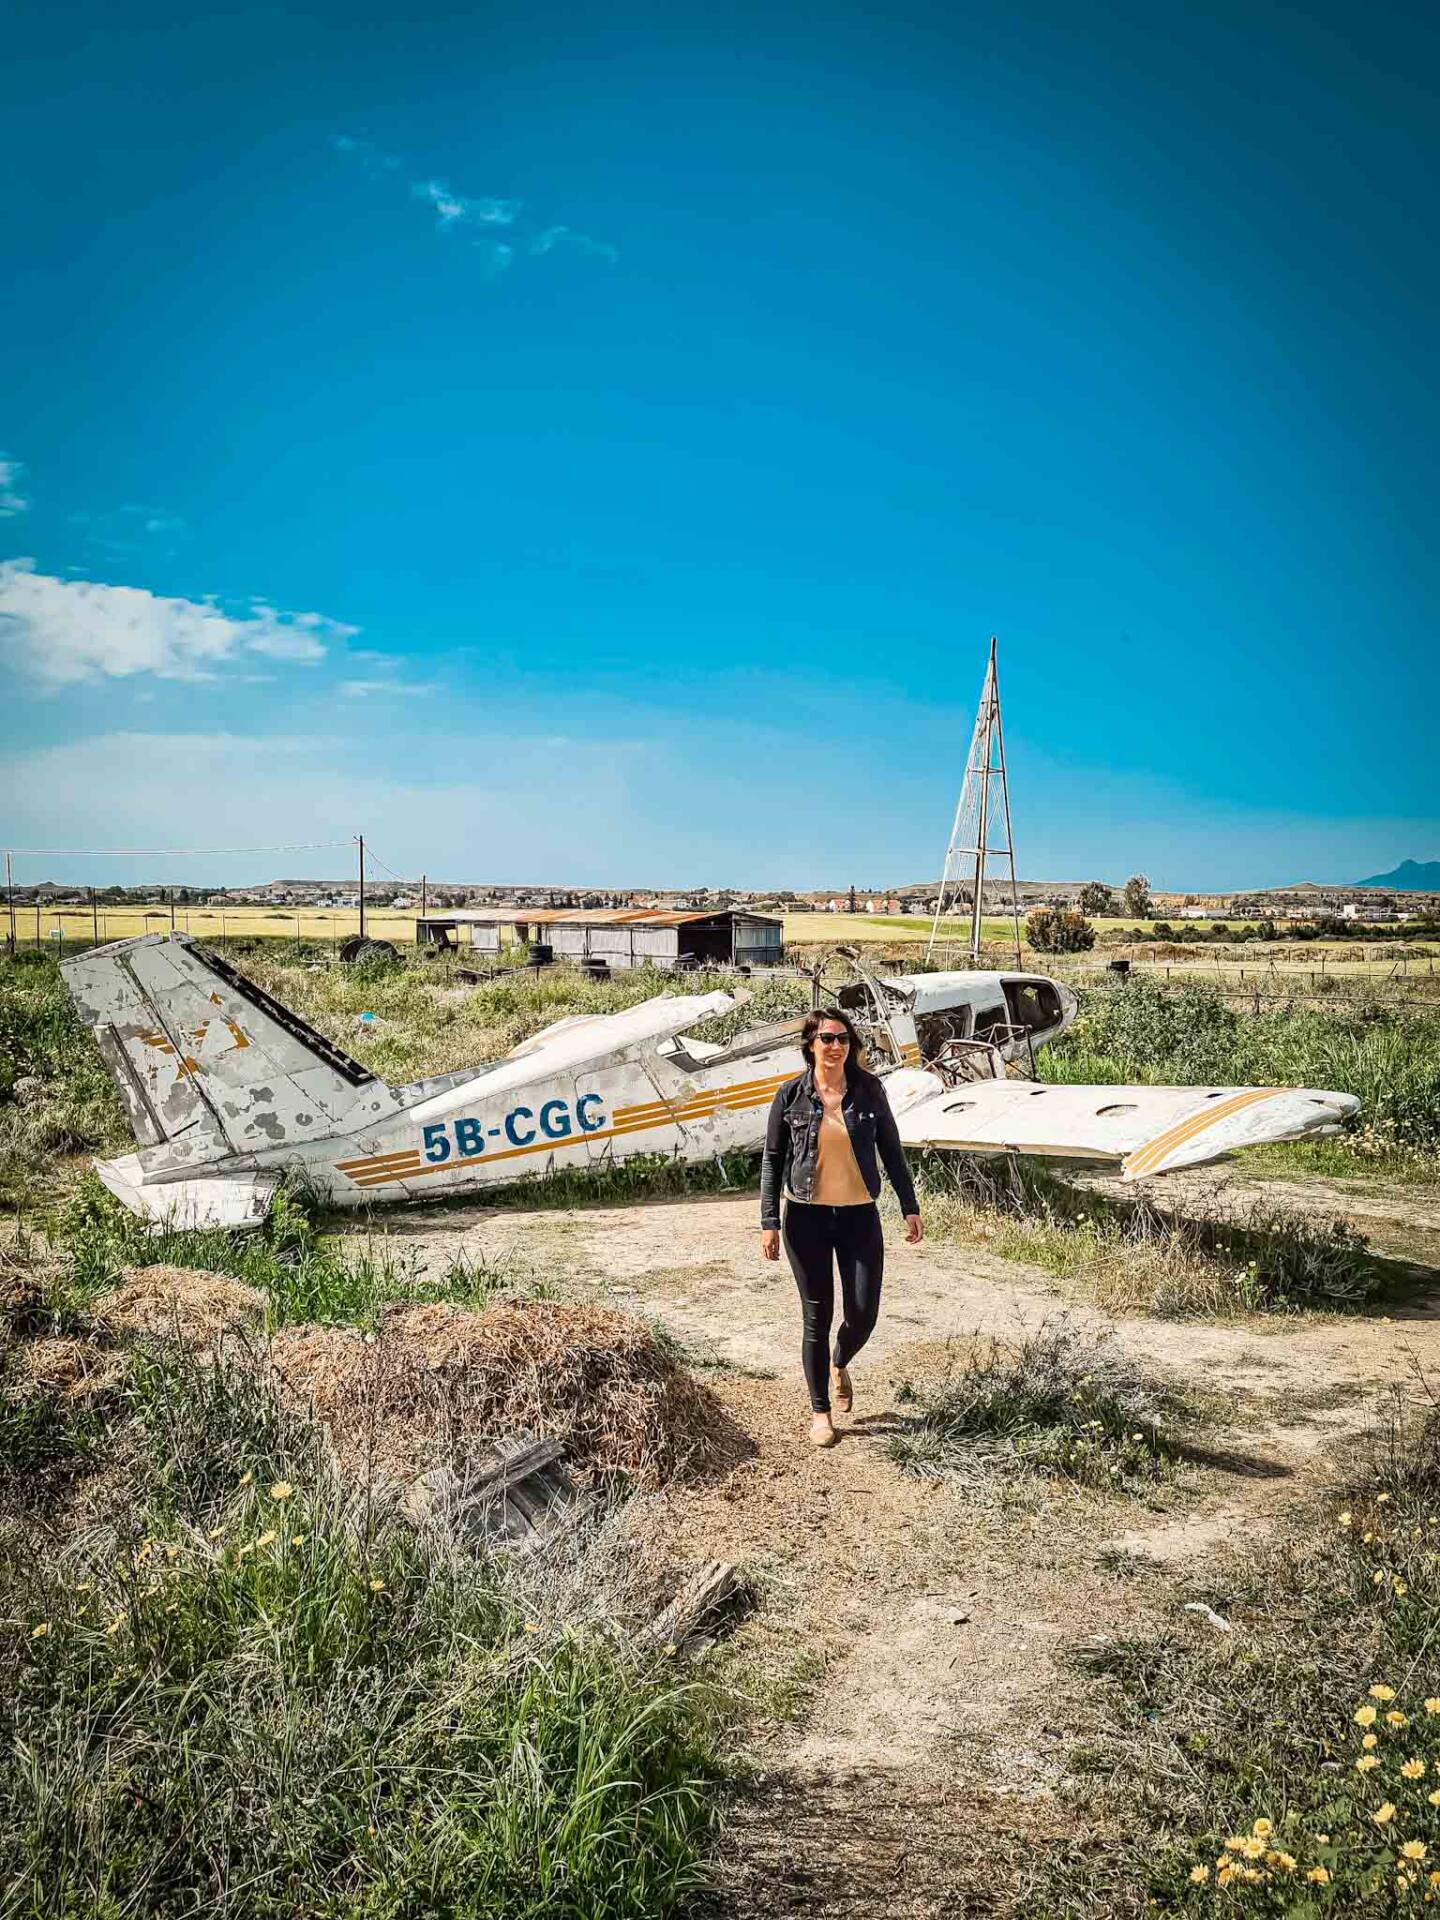 Instagram spots in Cyprus: Abandoned airplane in Tseri